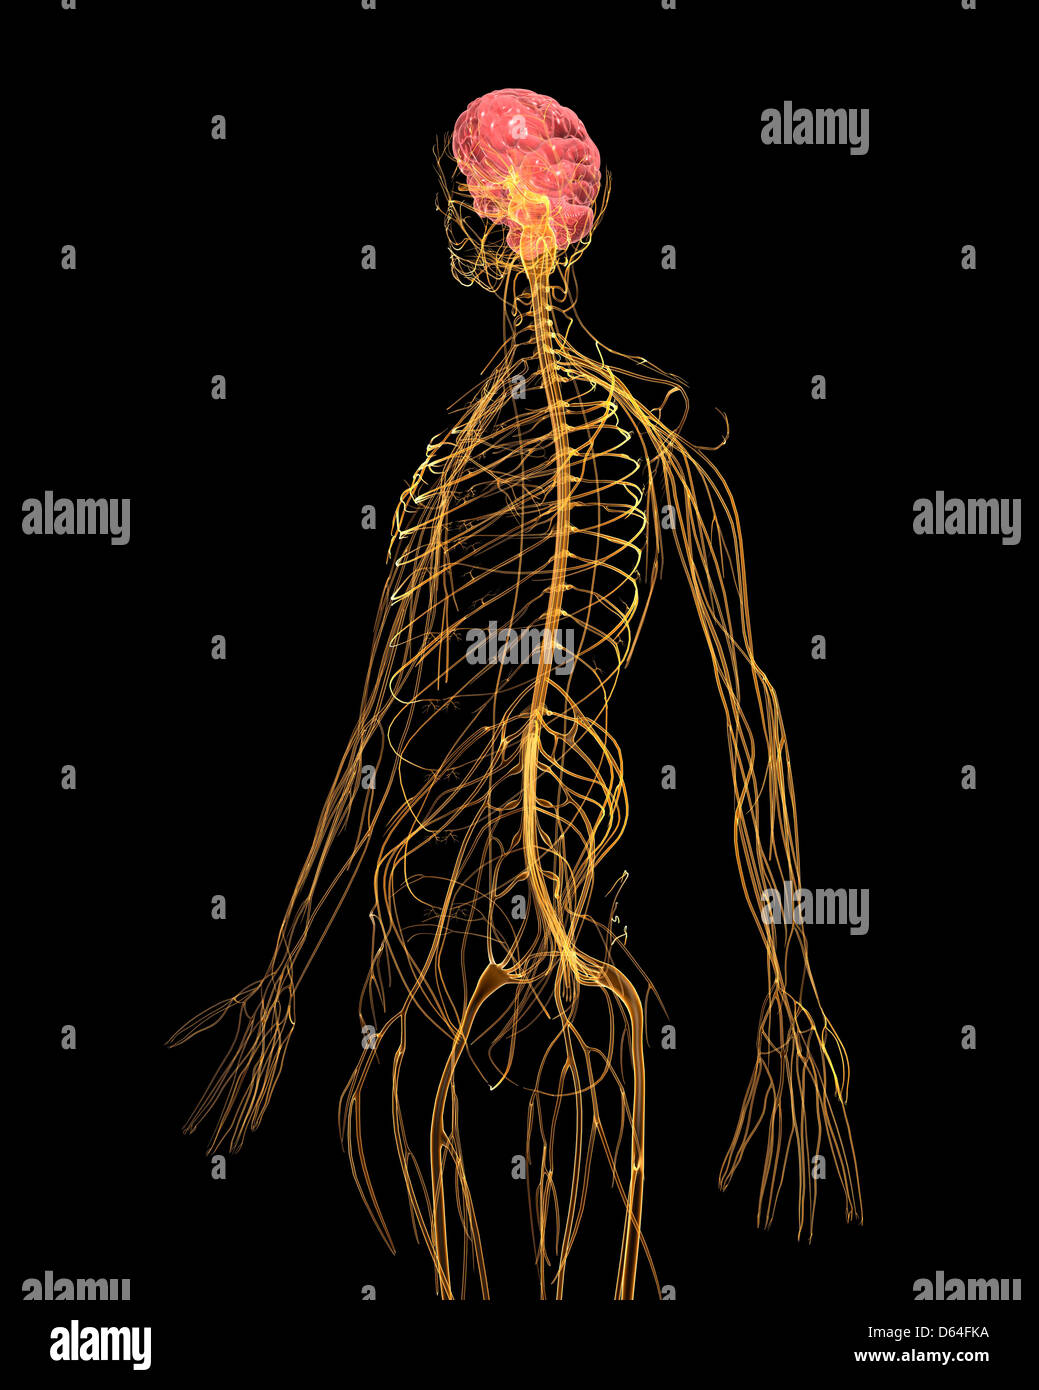 Human nervous system, artwork Stock Photo